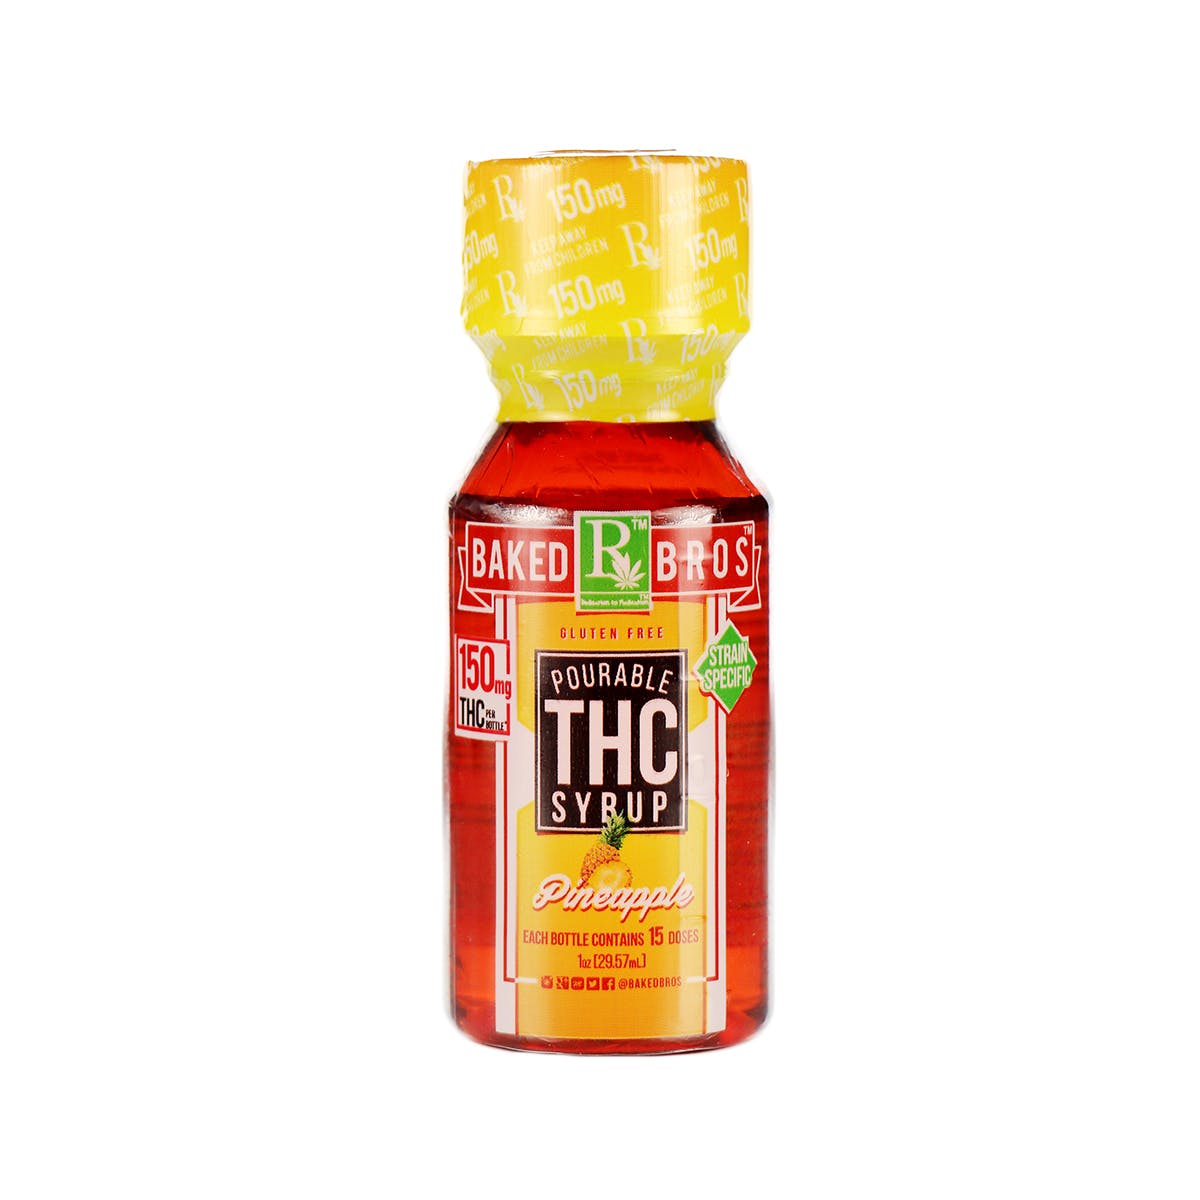 THC Syrup Pineapple 150mg